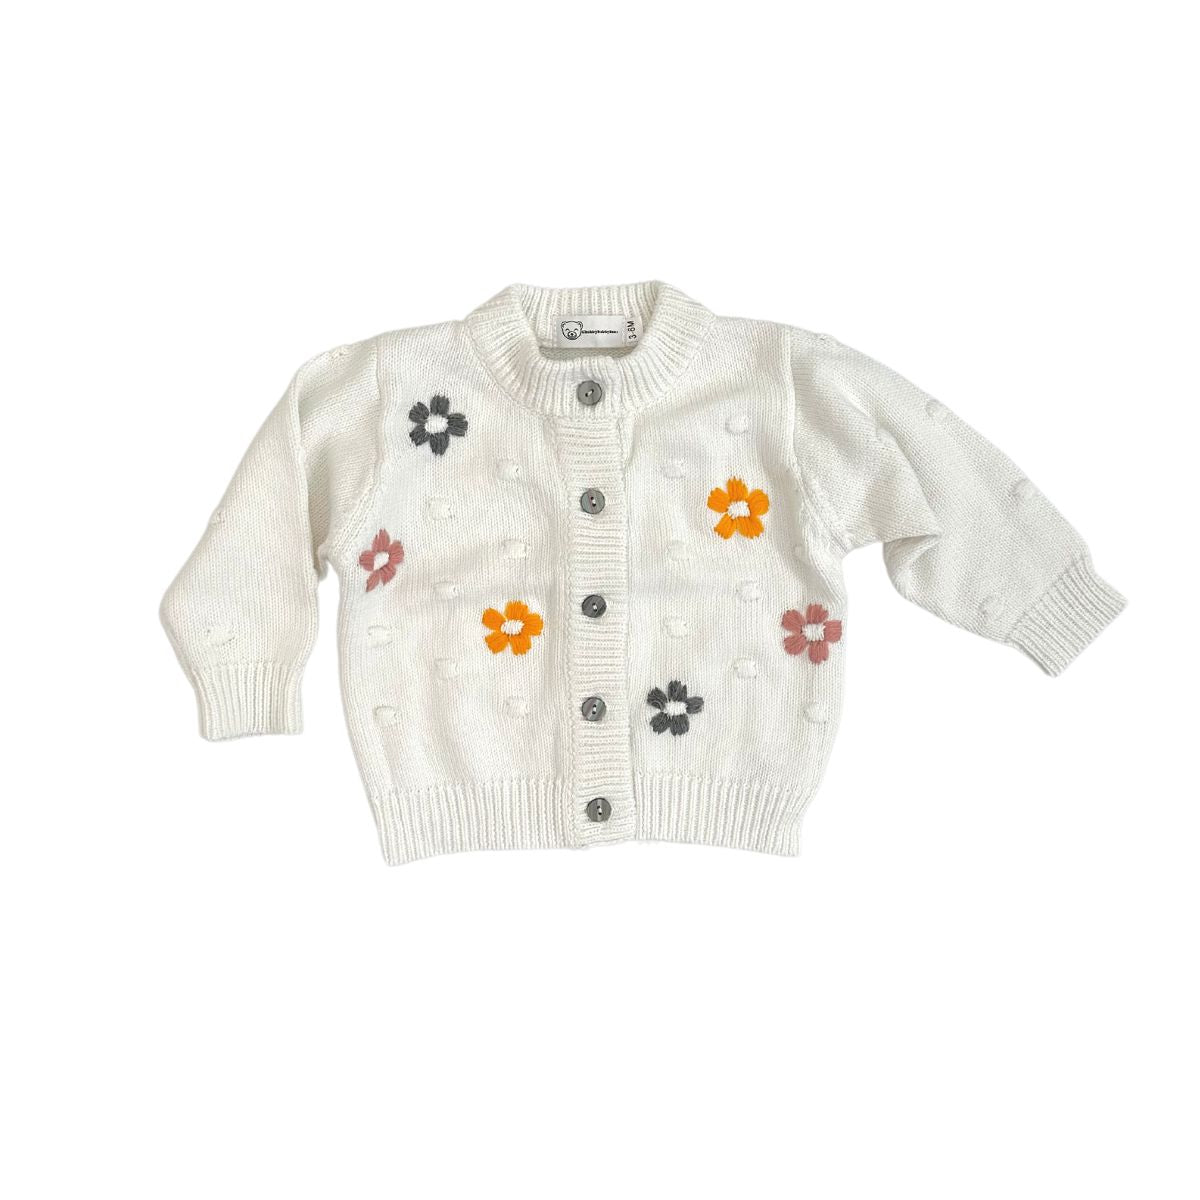 Quinn button up floral sweater